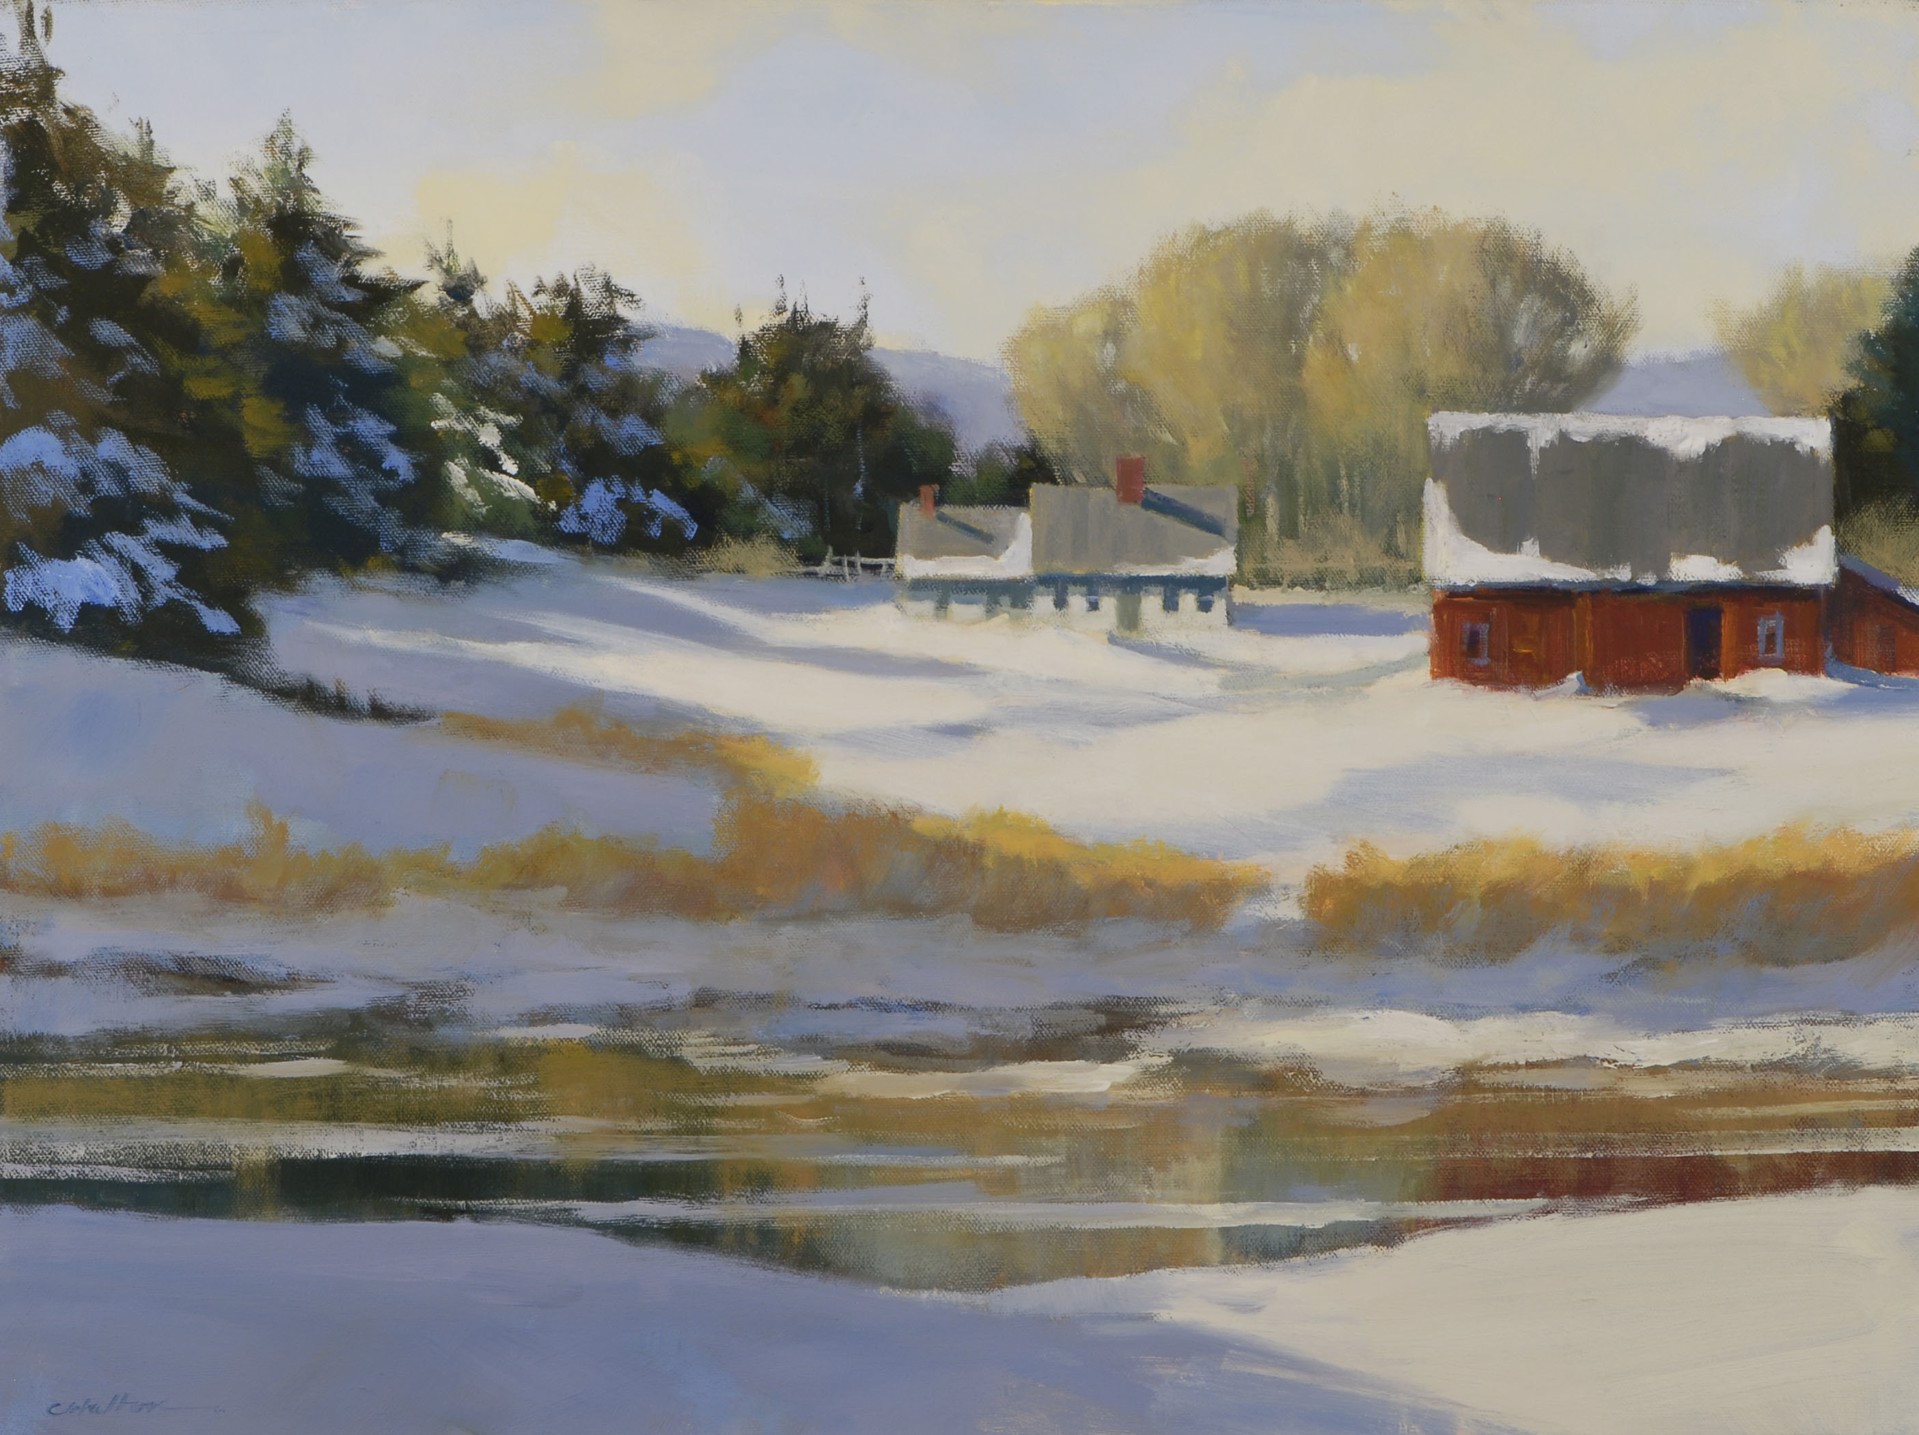 Farm Reflections in Winter  by Carolyn Walton